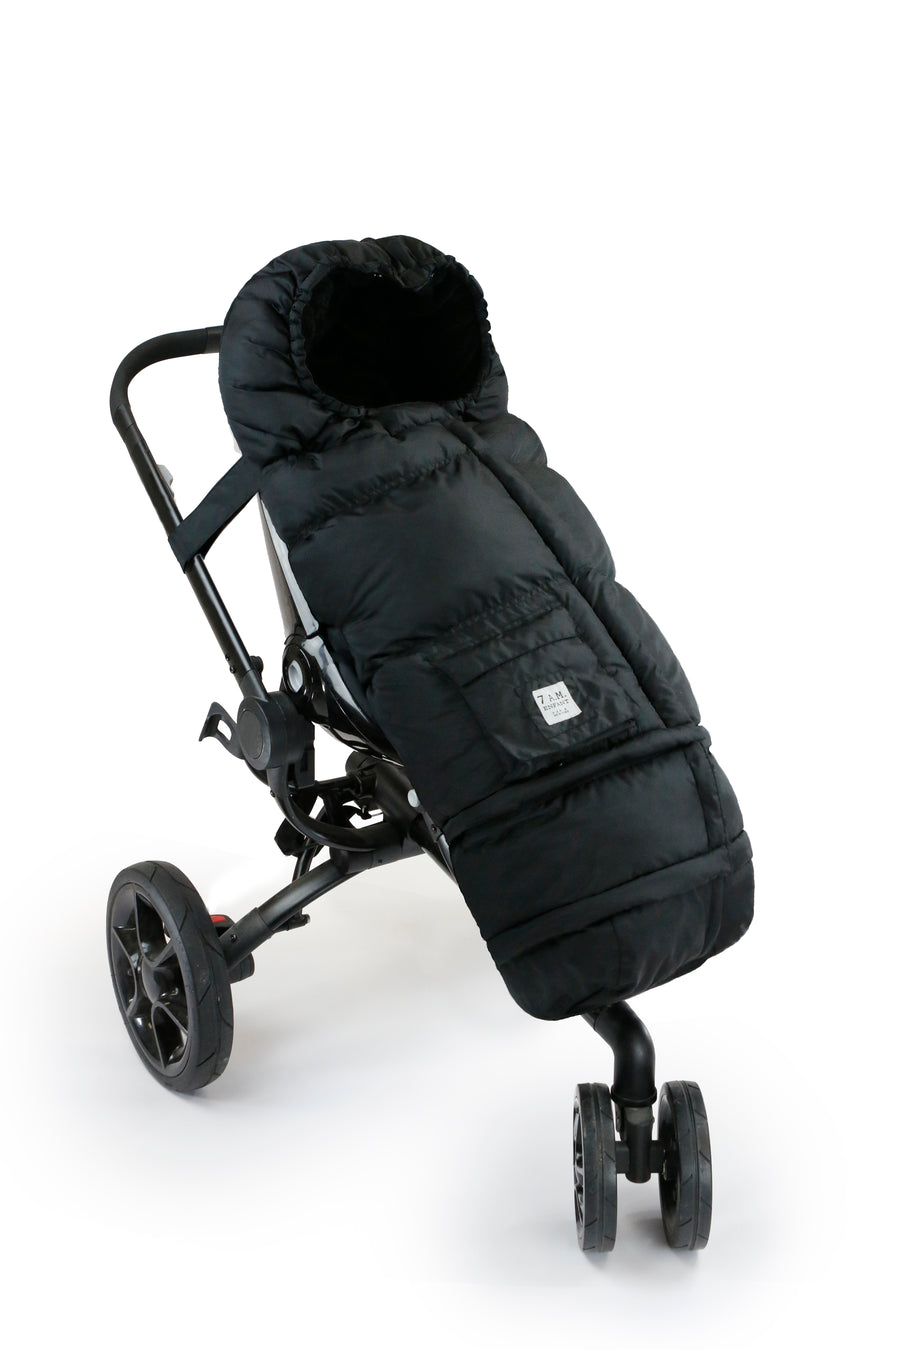 Evolution Stroller Blanket in Plush Black | The Baby FootPrint